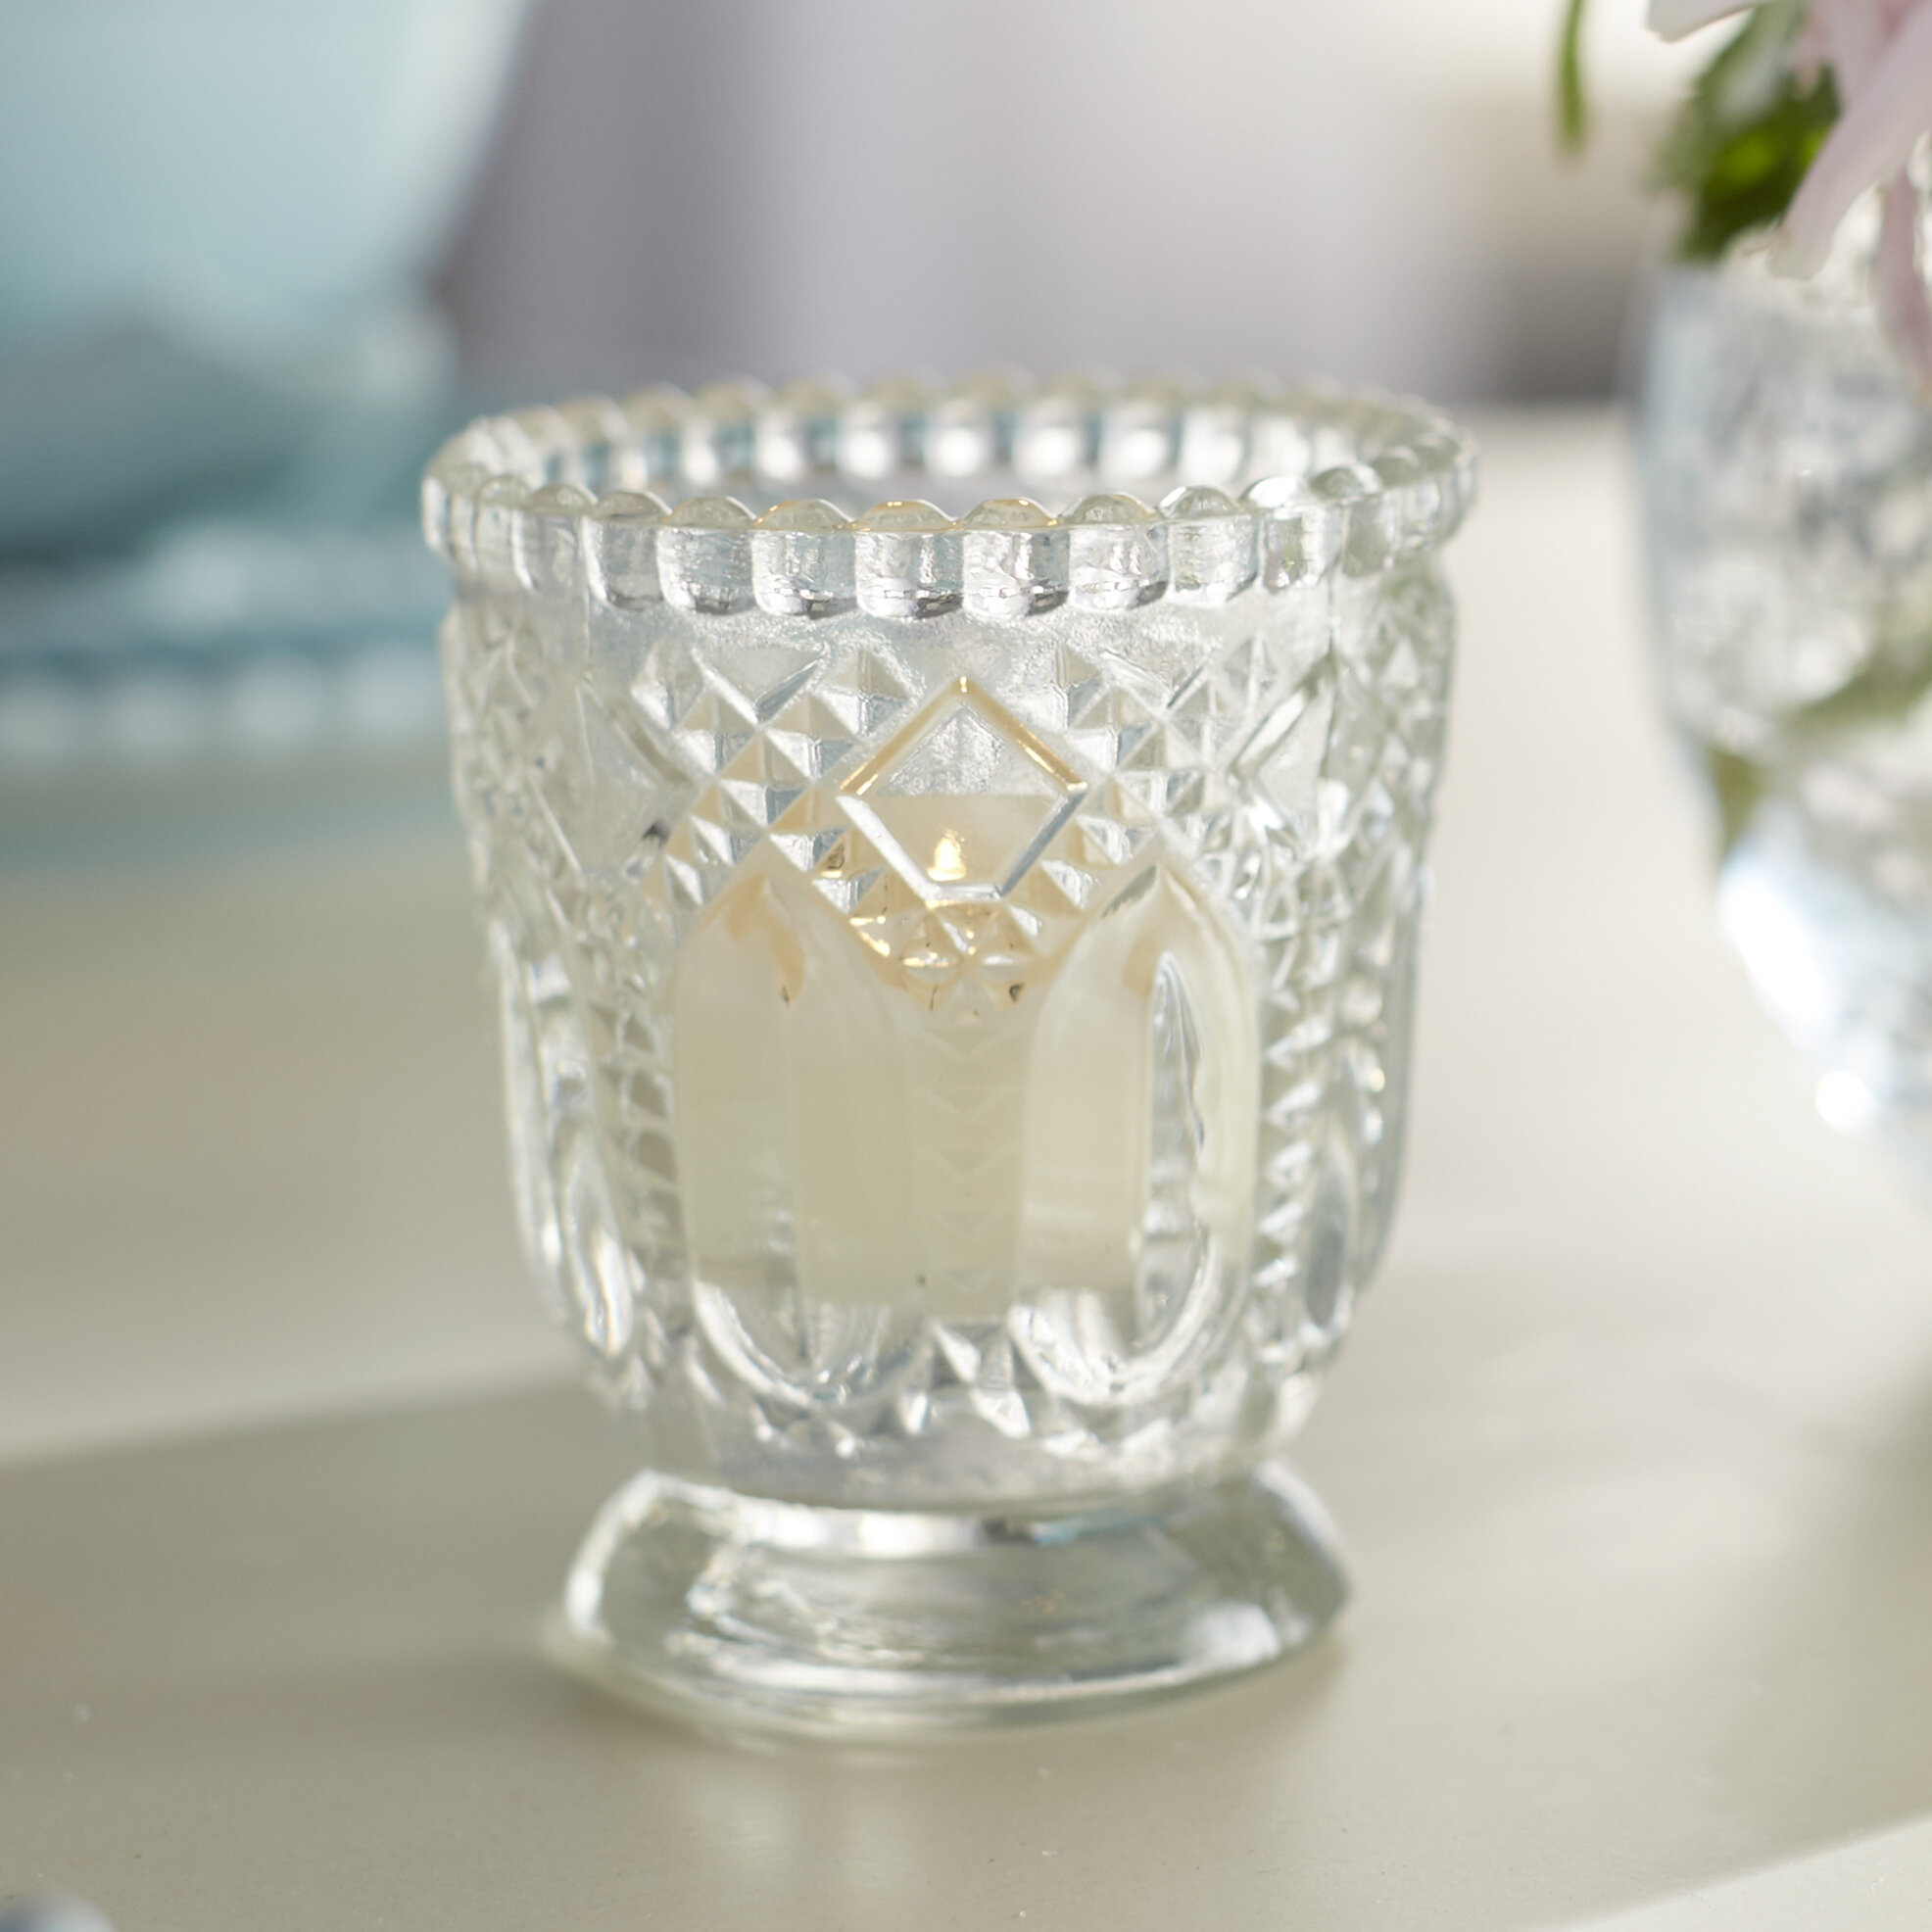 White Ornate Candle Holder Glass Ceramic Tea Light Country Vintage Wedding Home